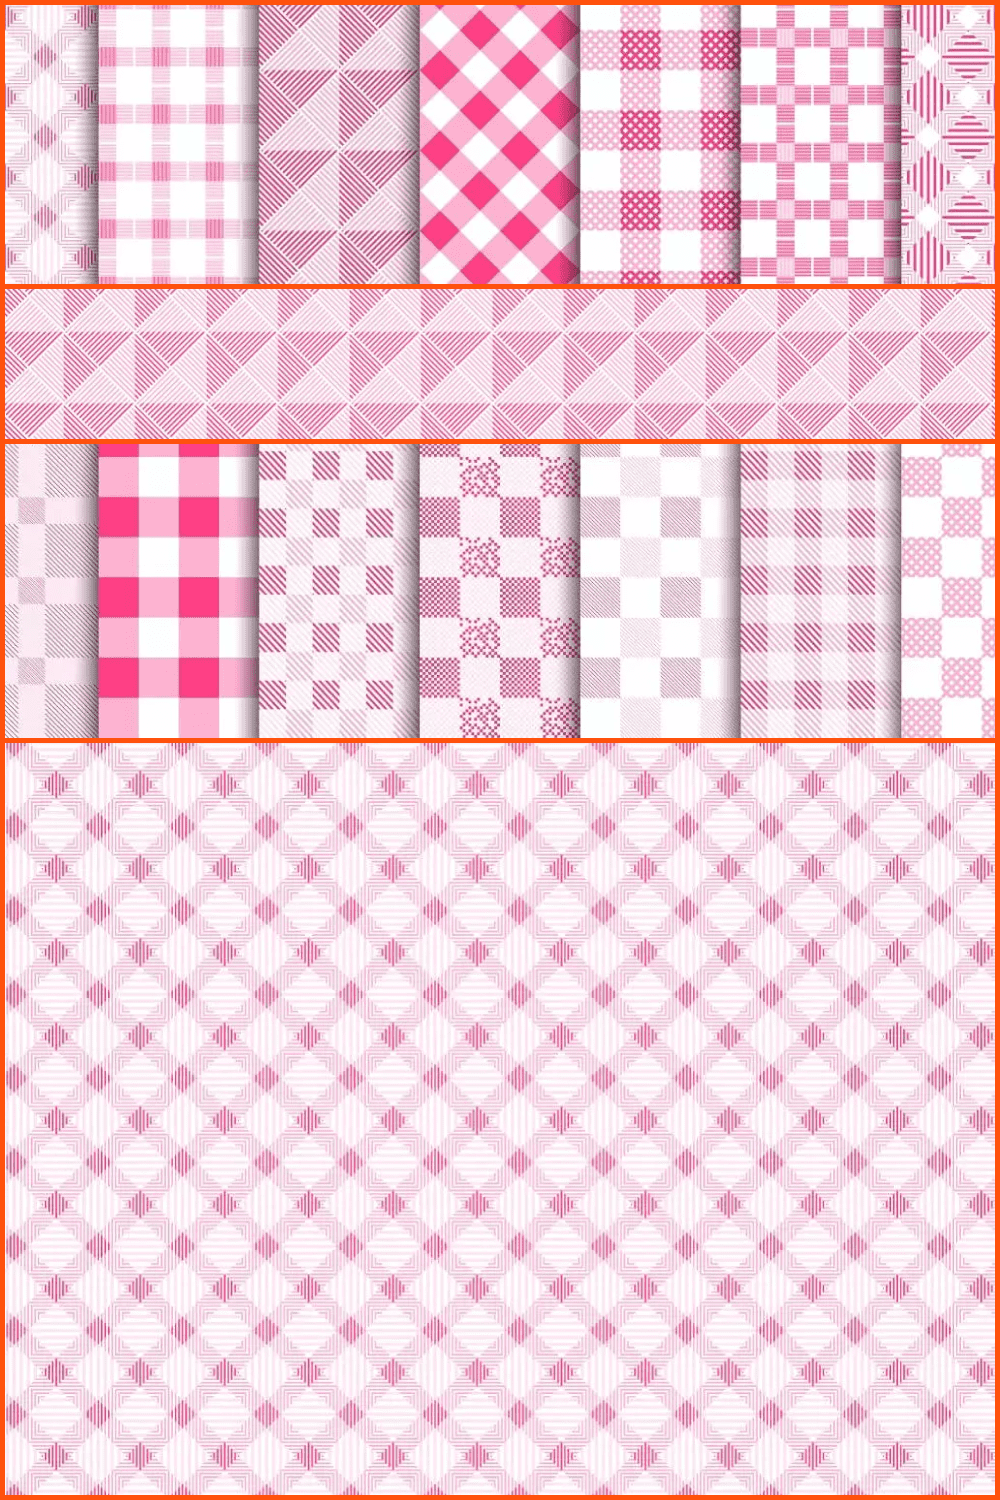 Textile Seamless Patterns.